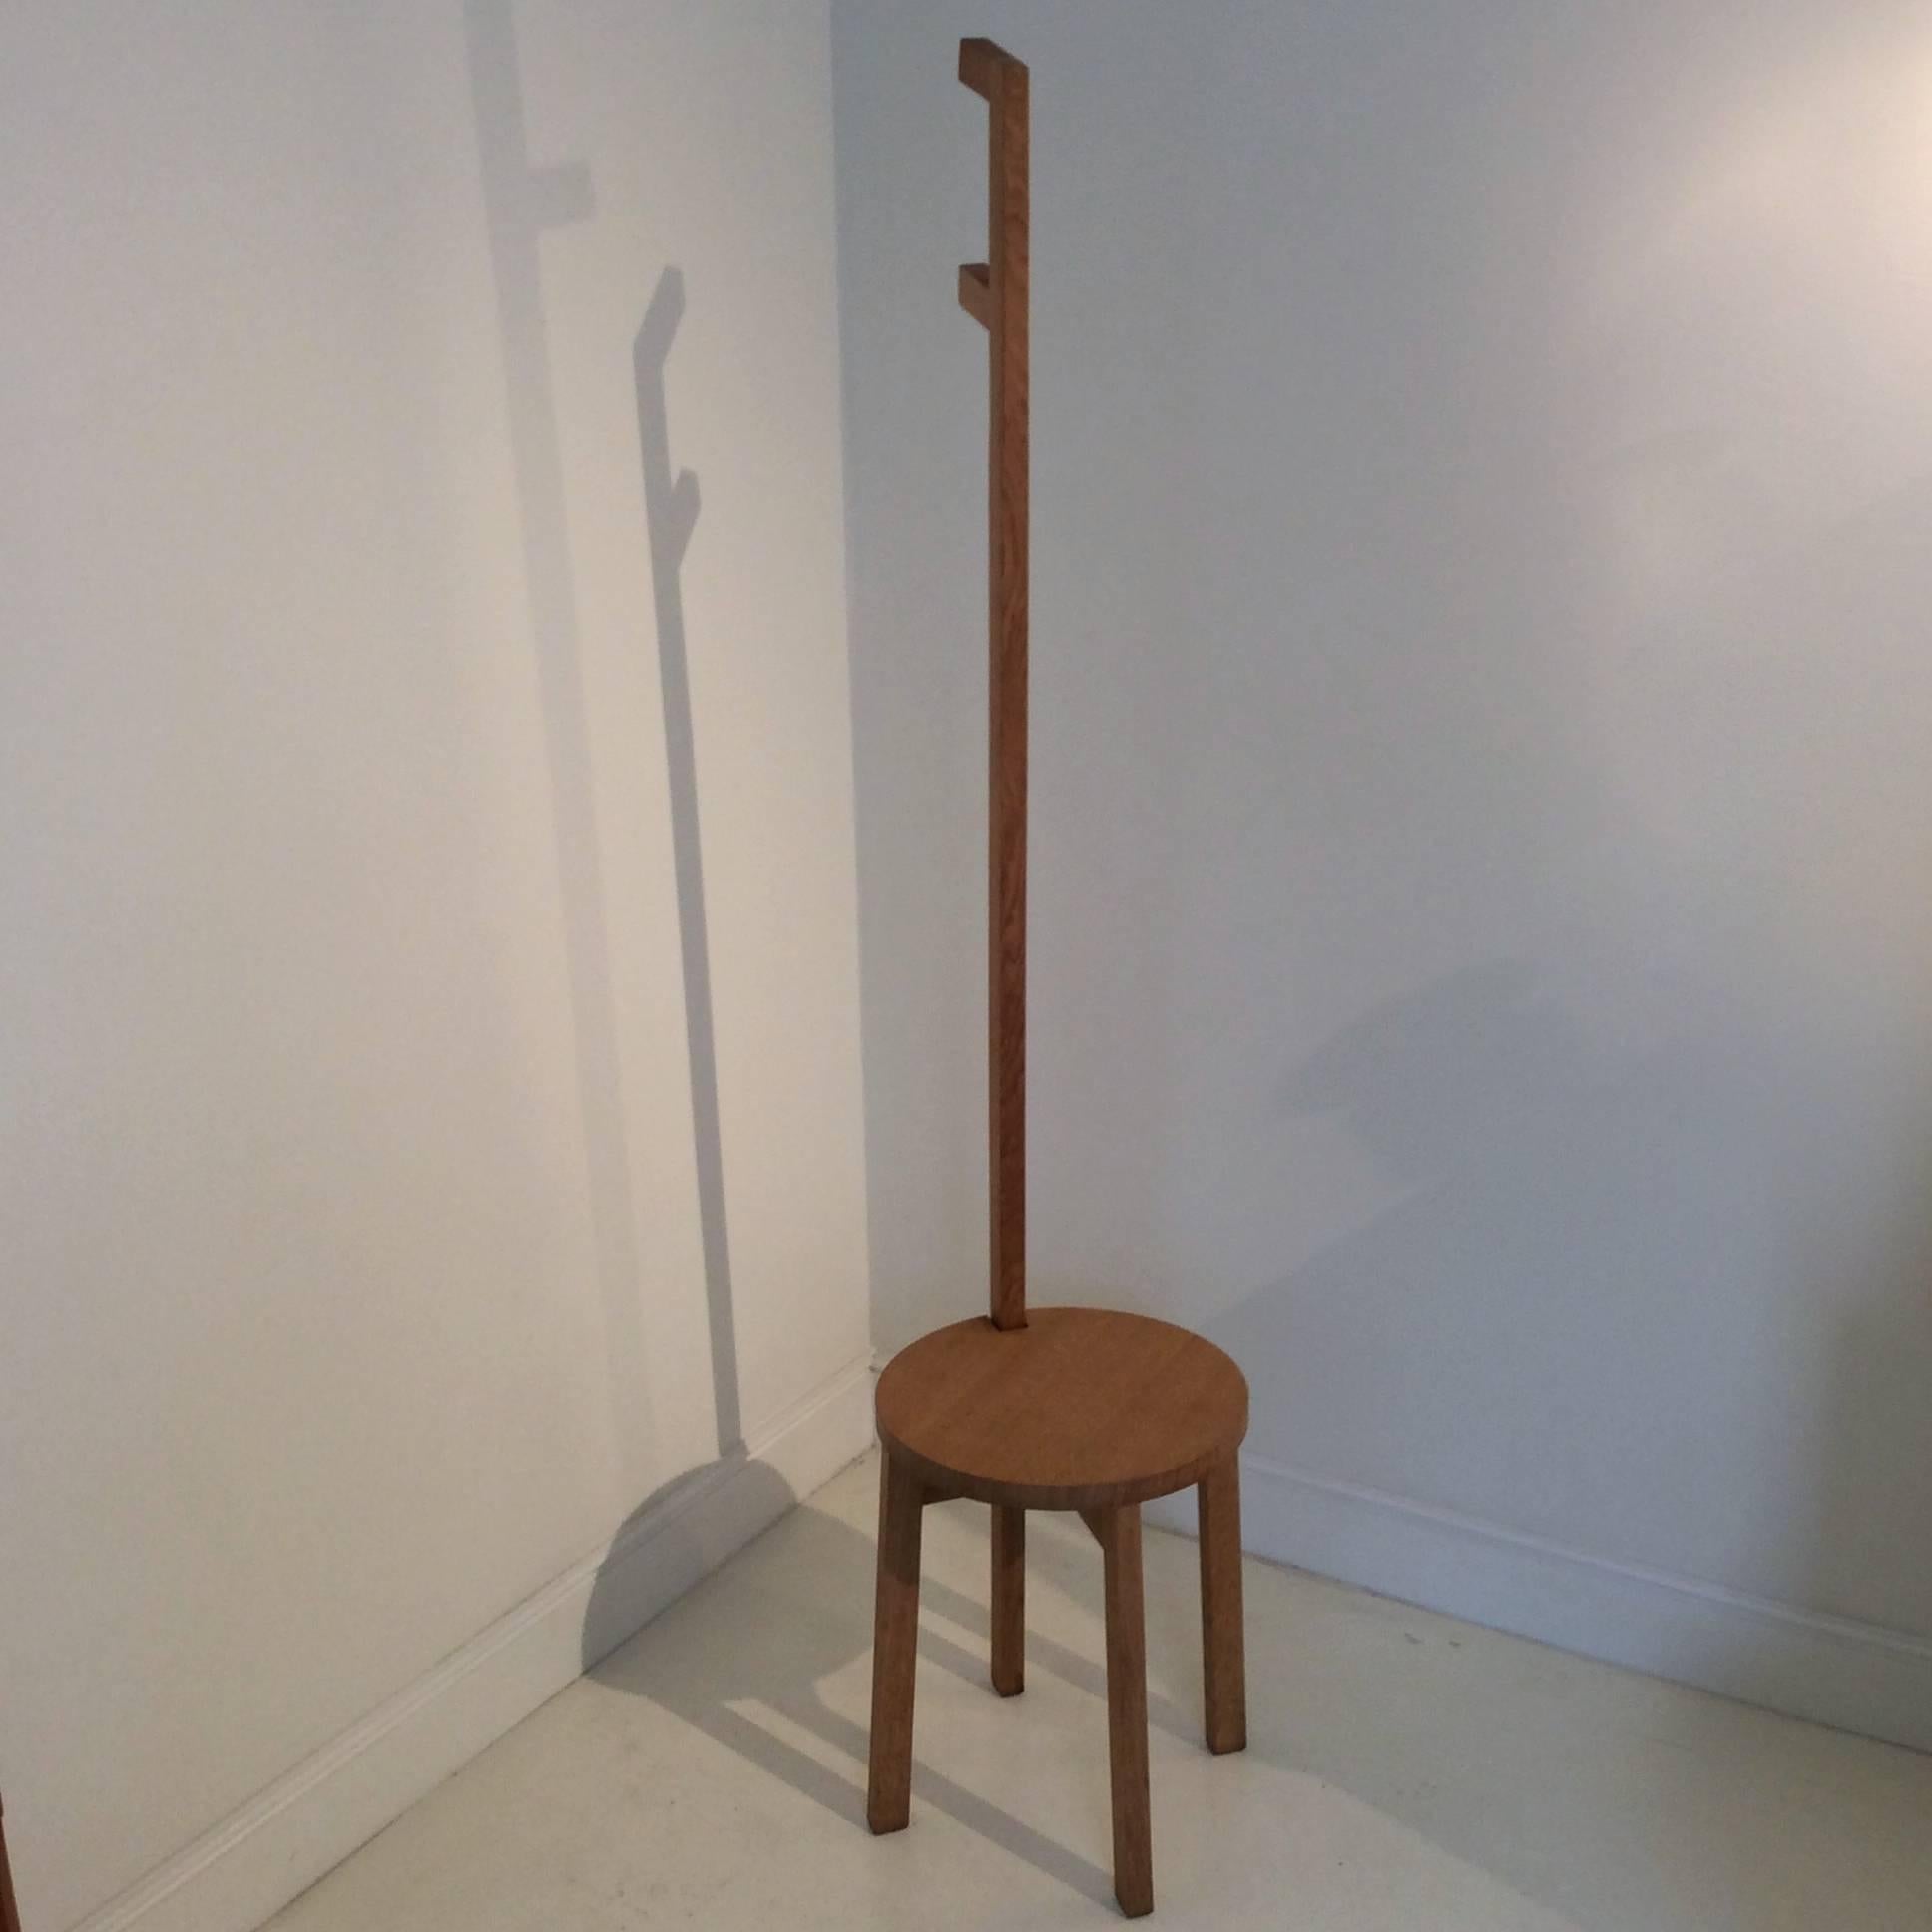 Marina Bautier, coat hanger-stool.
Prototype designed in 2007, for Idee in Japan.
Oak, round seat, four legs, one higher forming coat hanger.
Measures: H 160 cm, diameter 35 cm.
Exposed at the Tokyo Design Week in 2007.
In 2014 Marina Bautier award